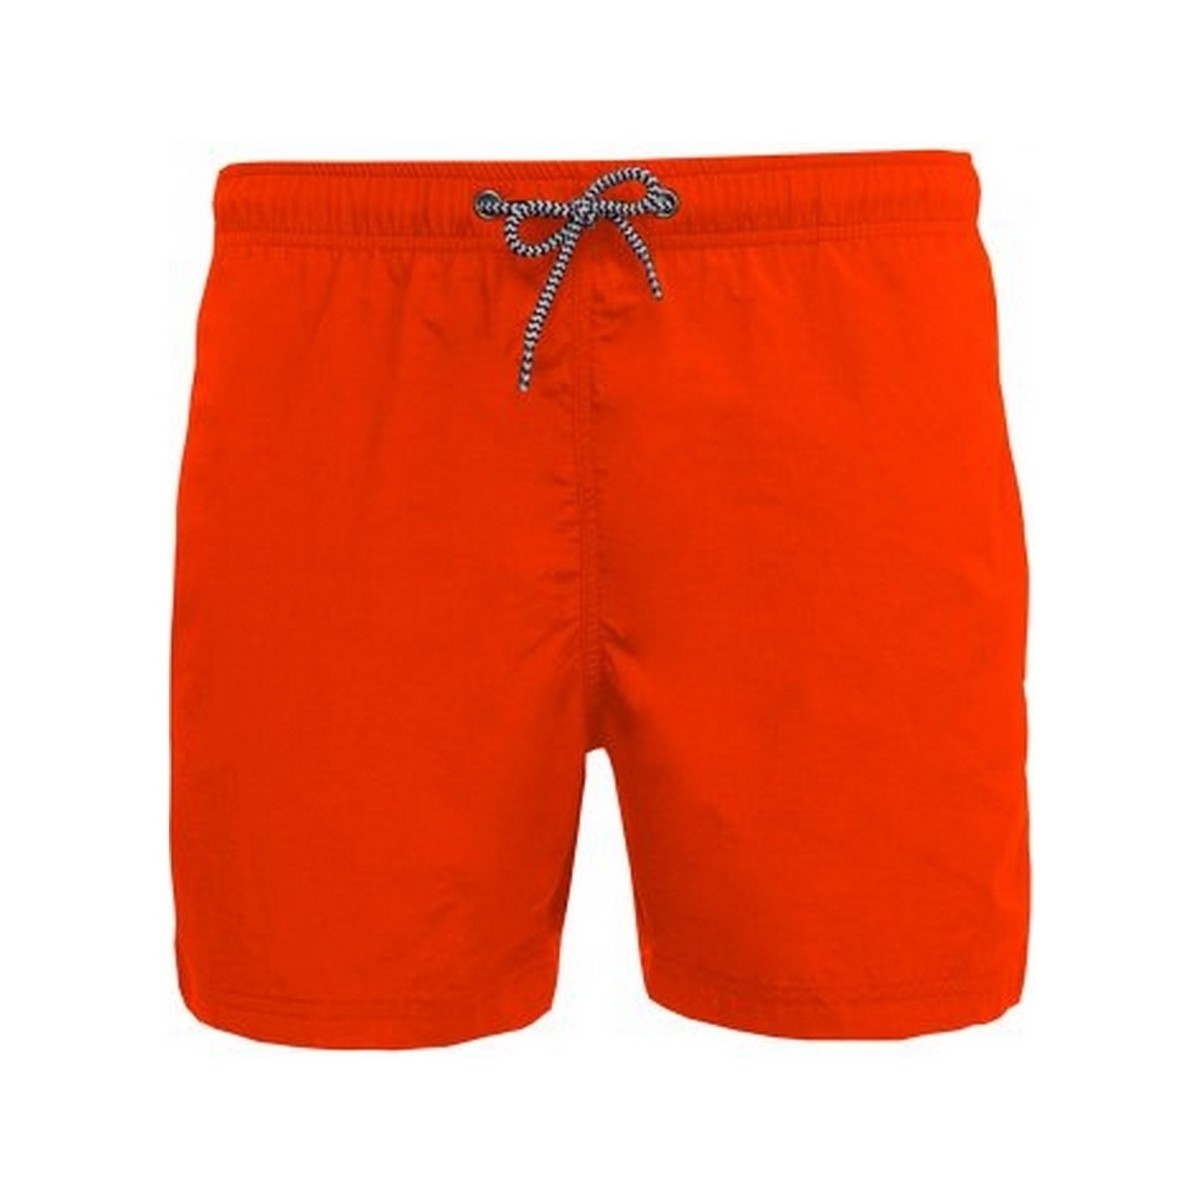 Vêtements Homme Shorts / Bermudas Proact PA168 Orange